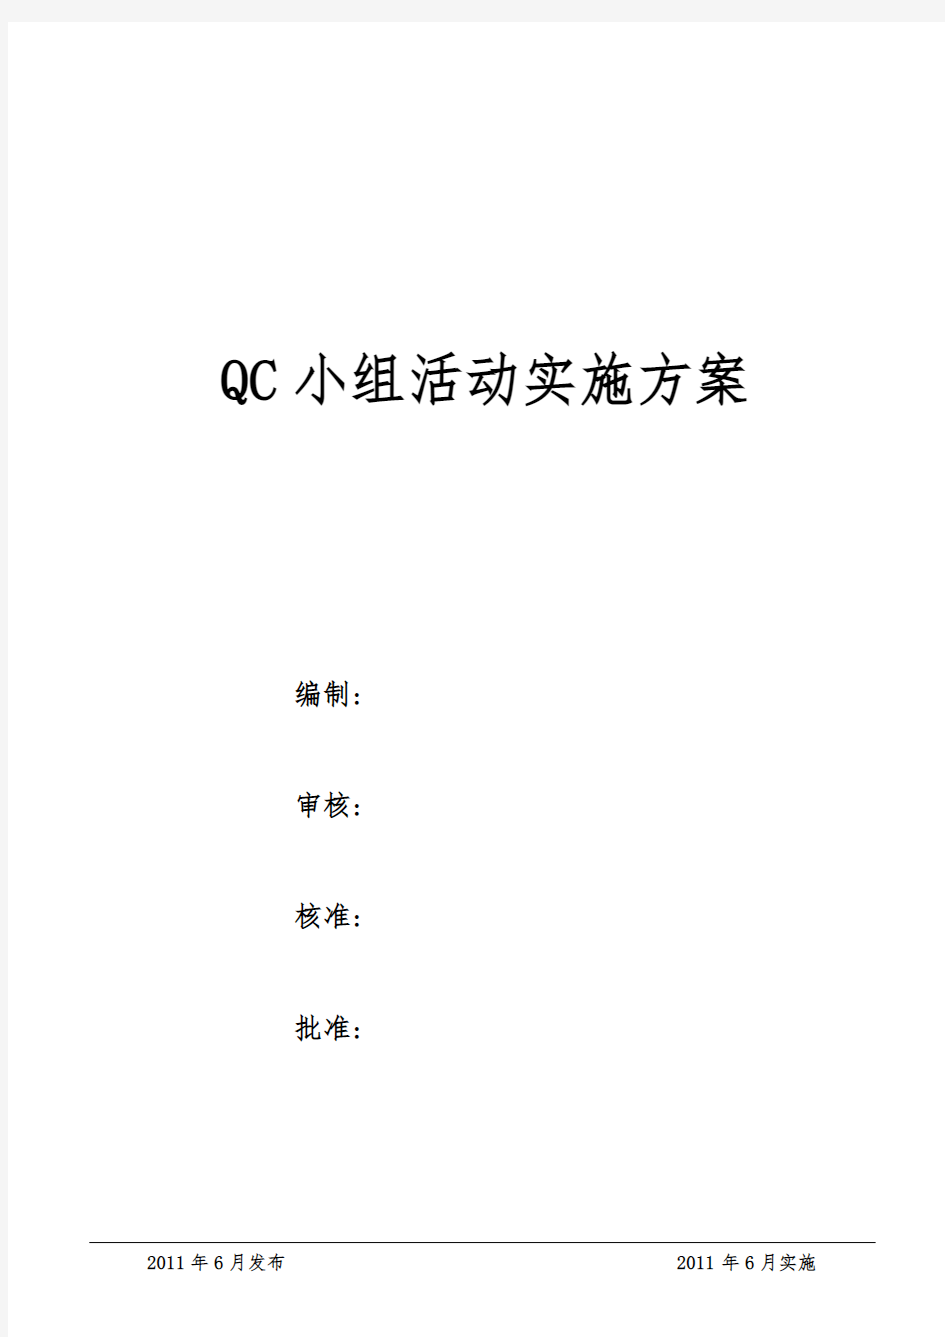 QC小组活动实施方案